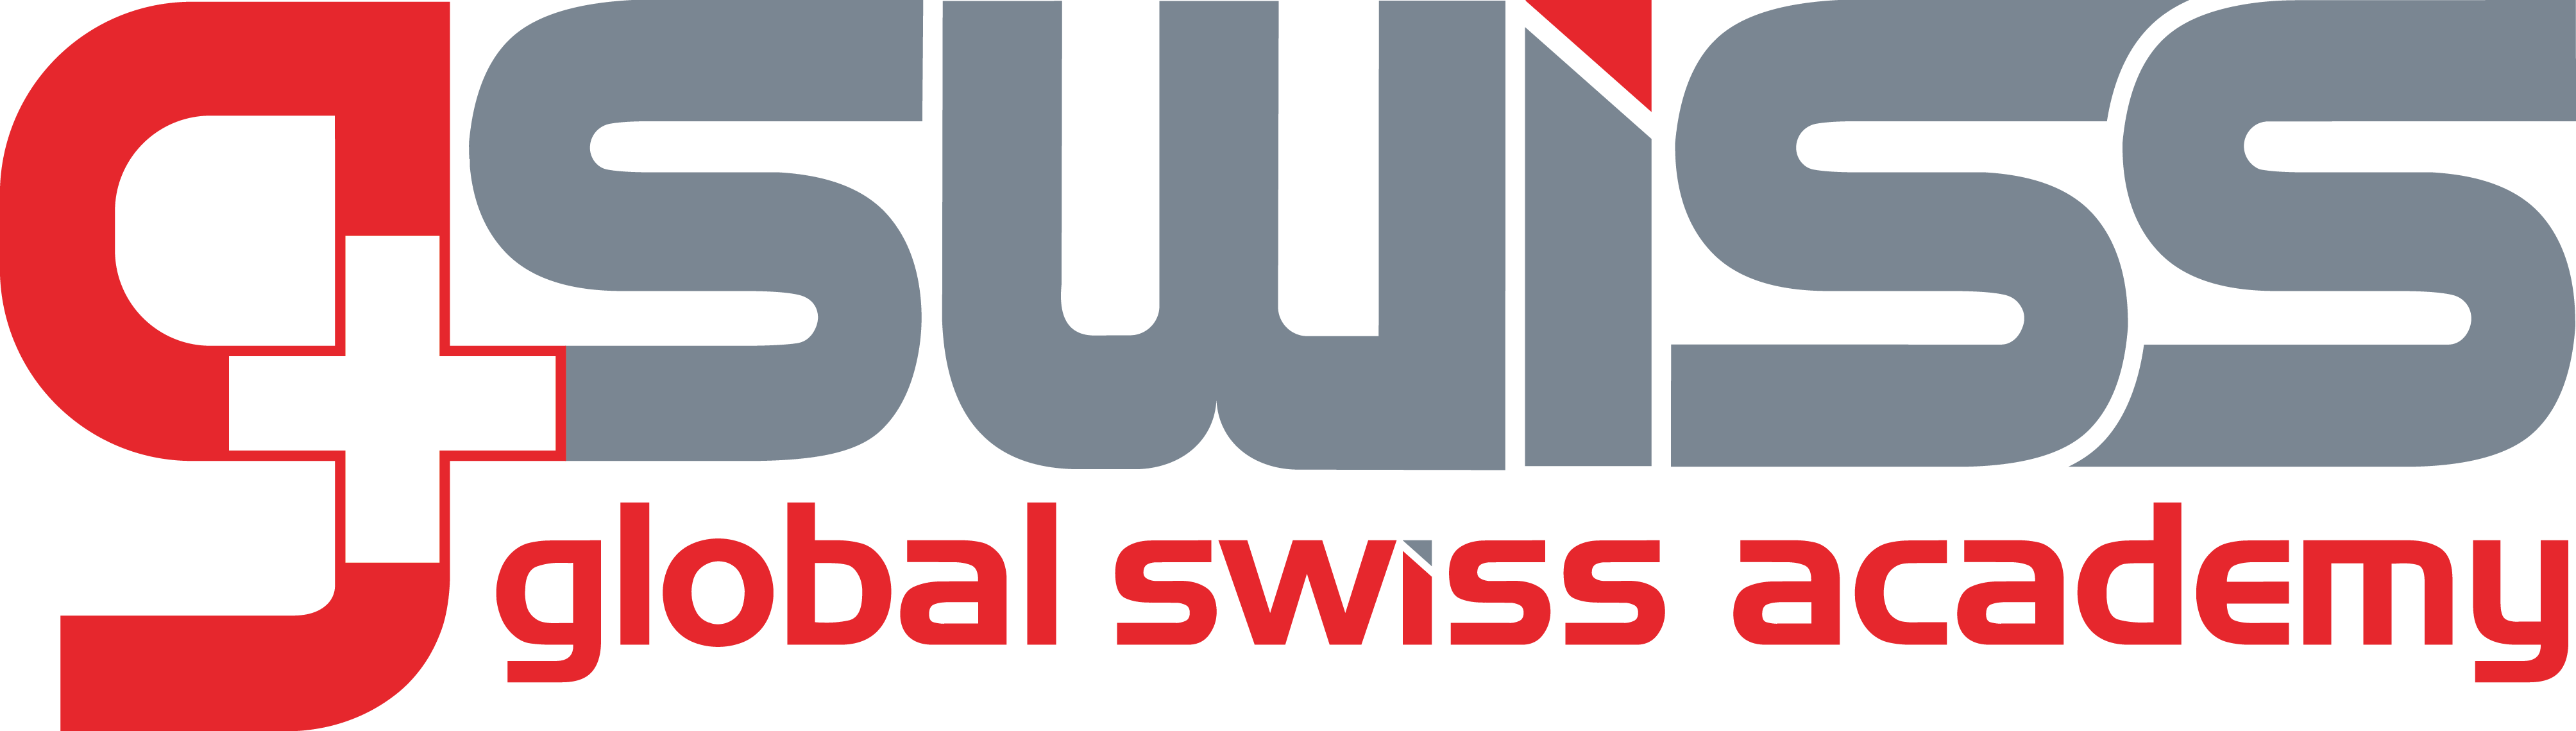 Global Swiss Academy